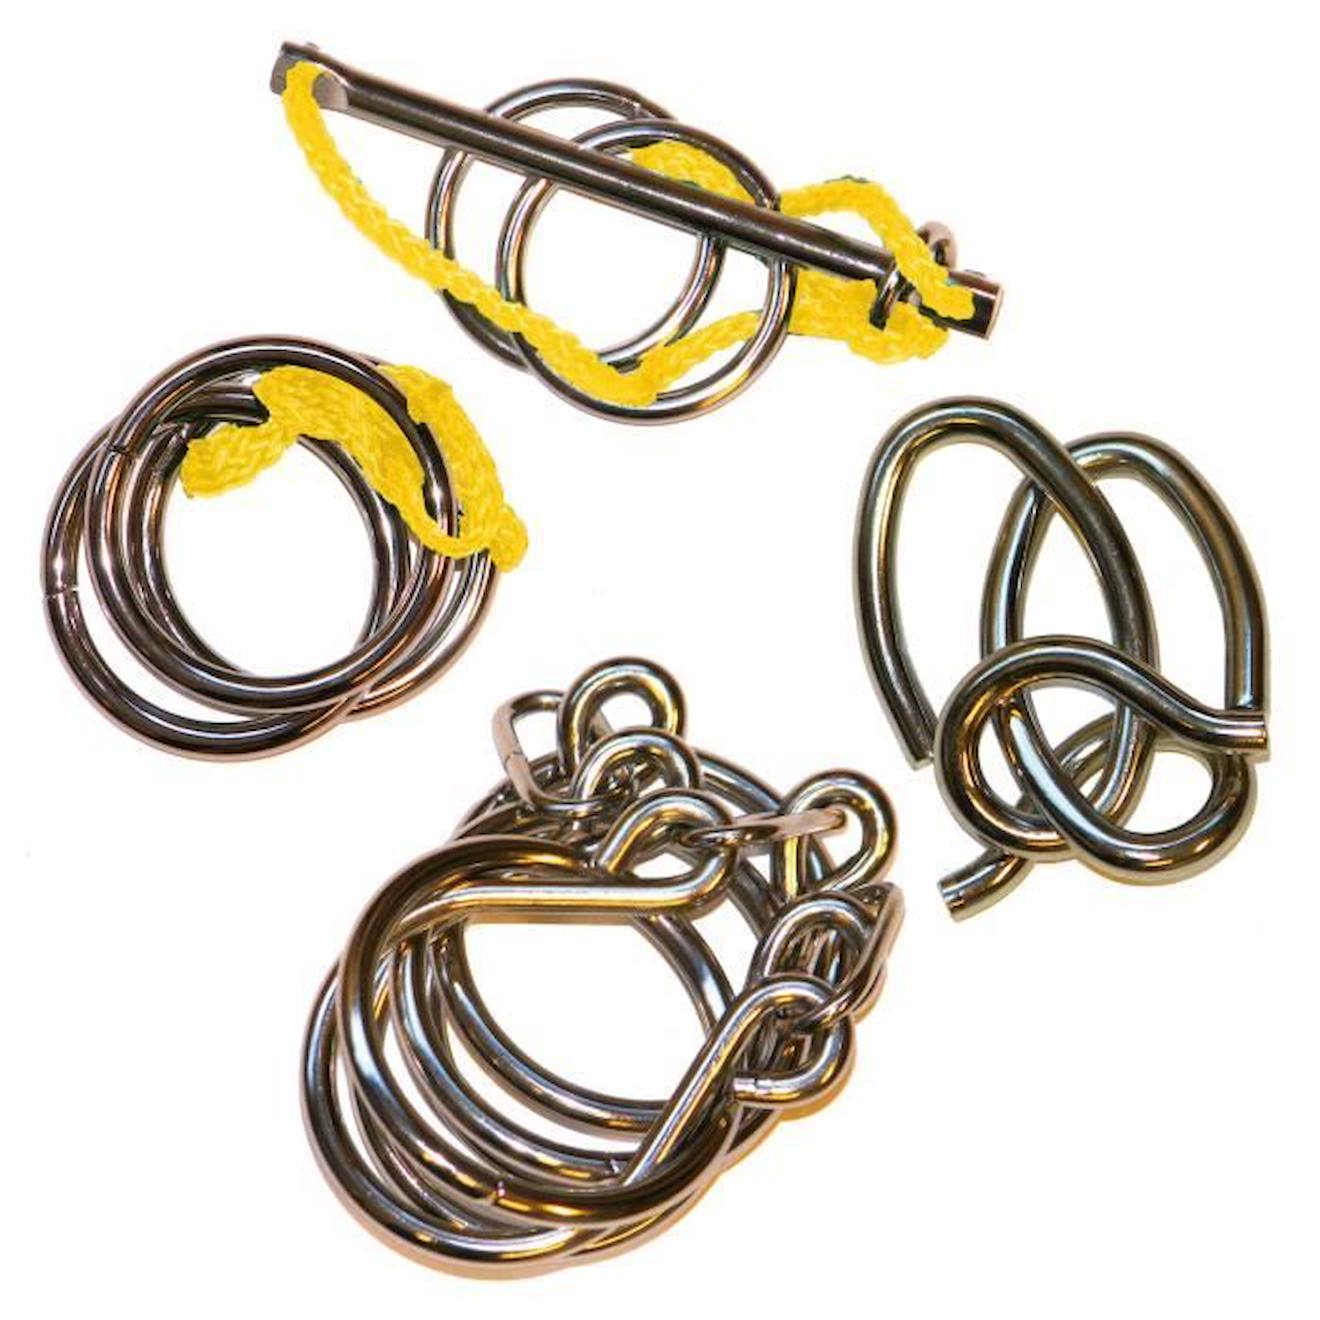 https://media.vertbaudet.fr/Pictures/vertbaudet/321429/casse-tetes-metal-expert-gigamic-quadruple-anneau-et-corde-jaune-mixte.jpg